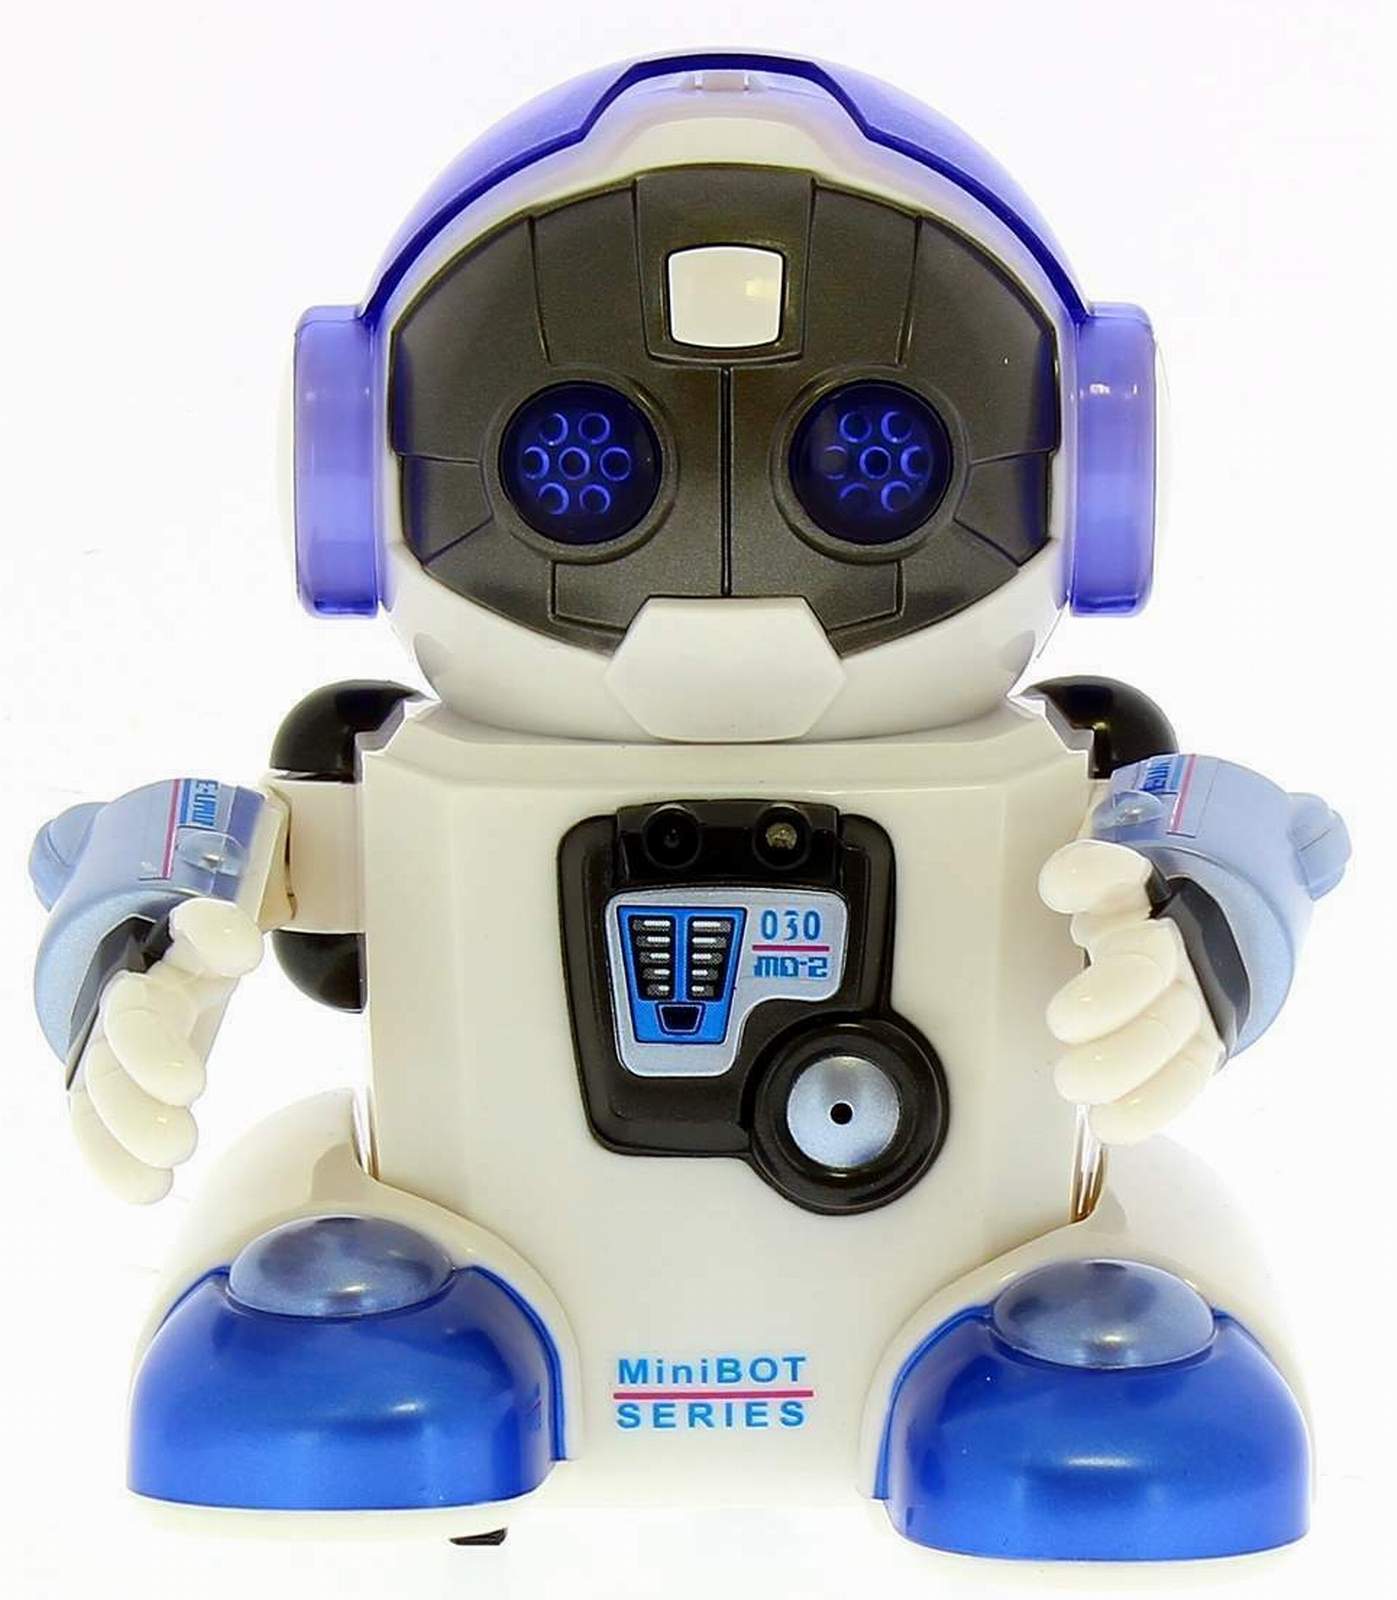 JabberBot Robot